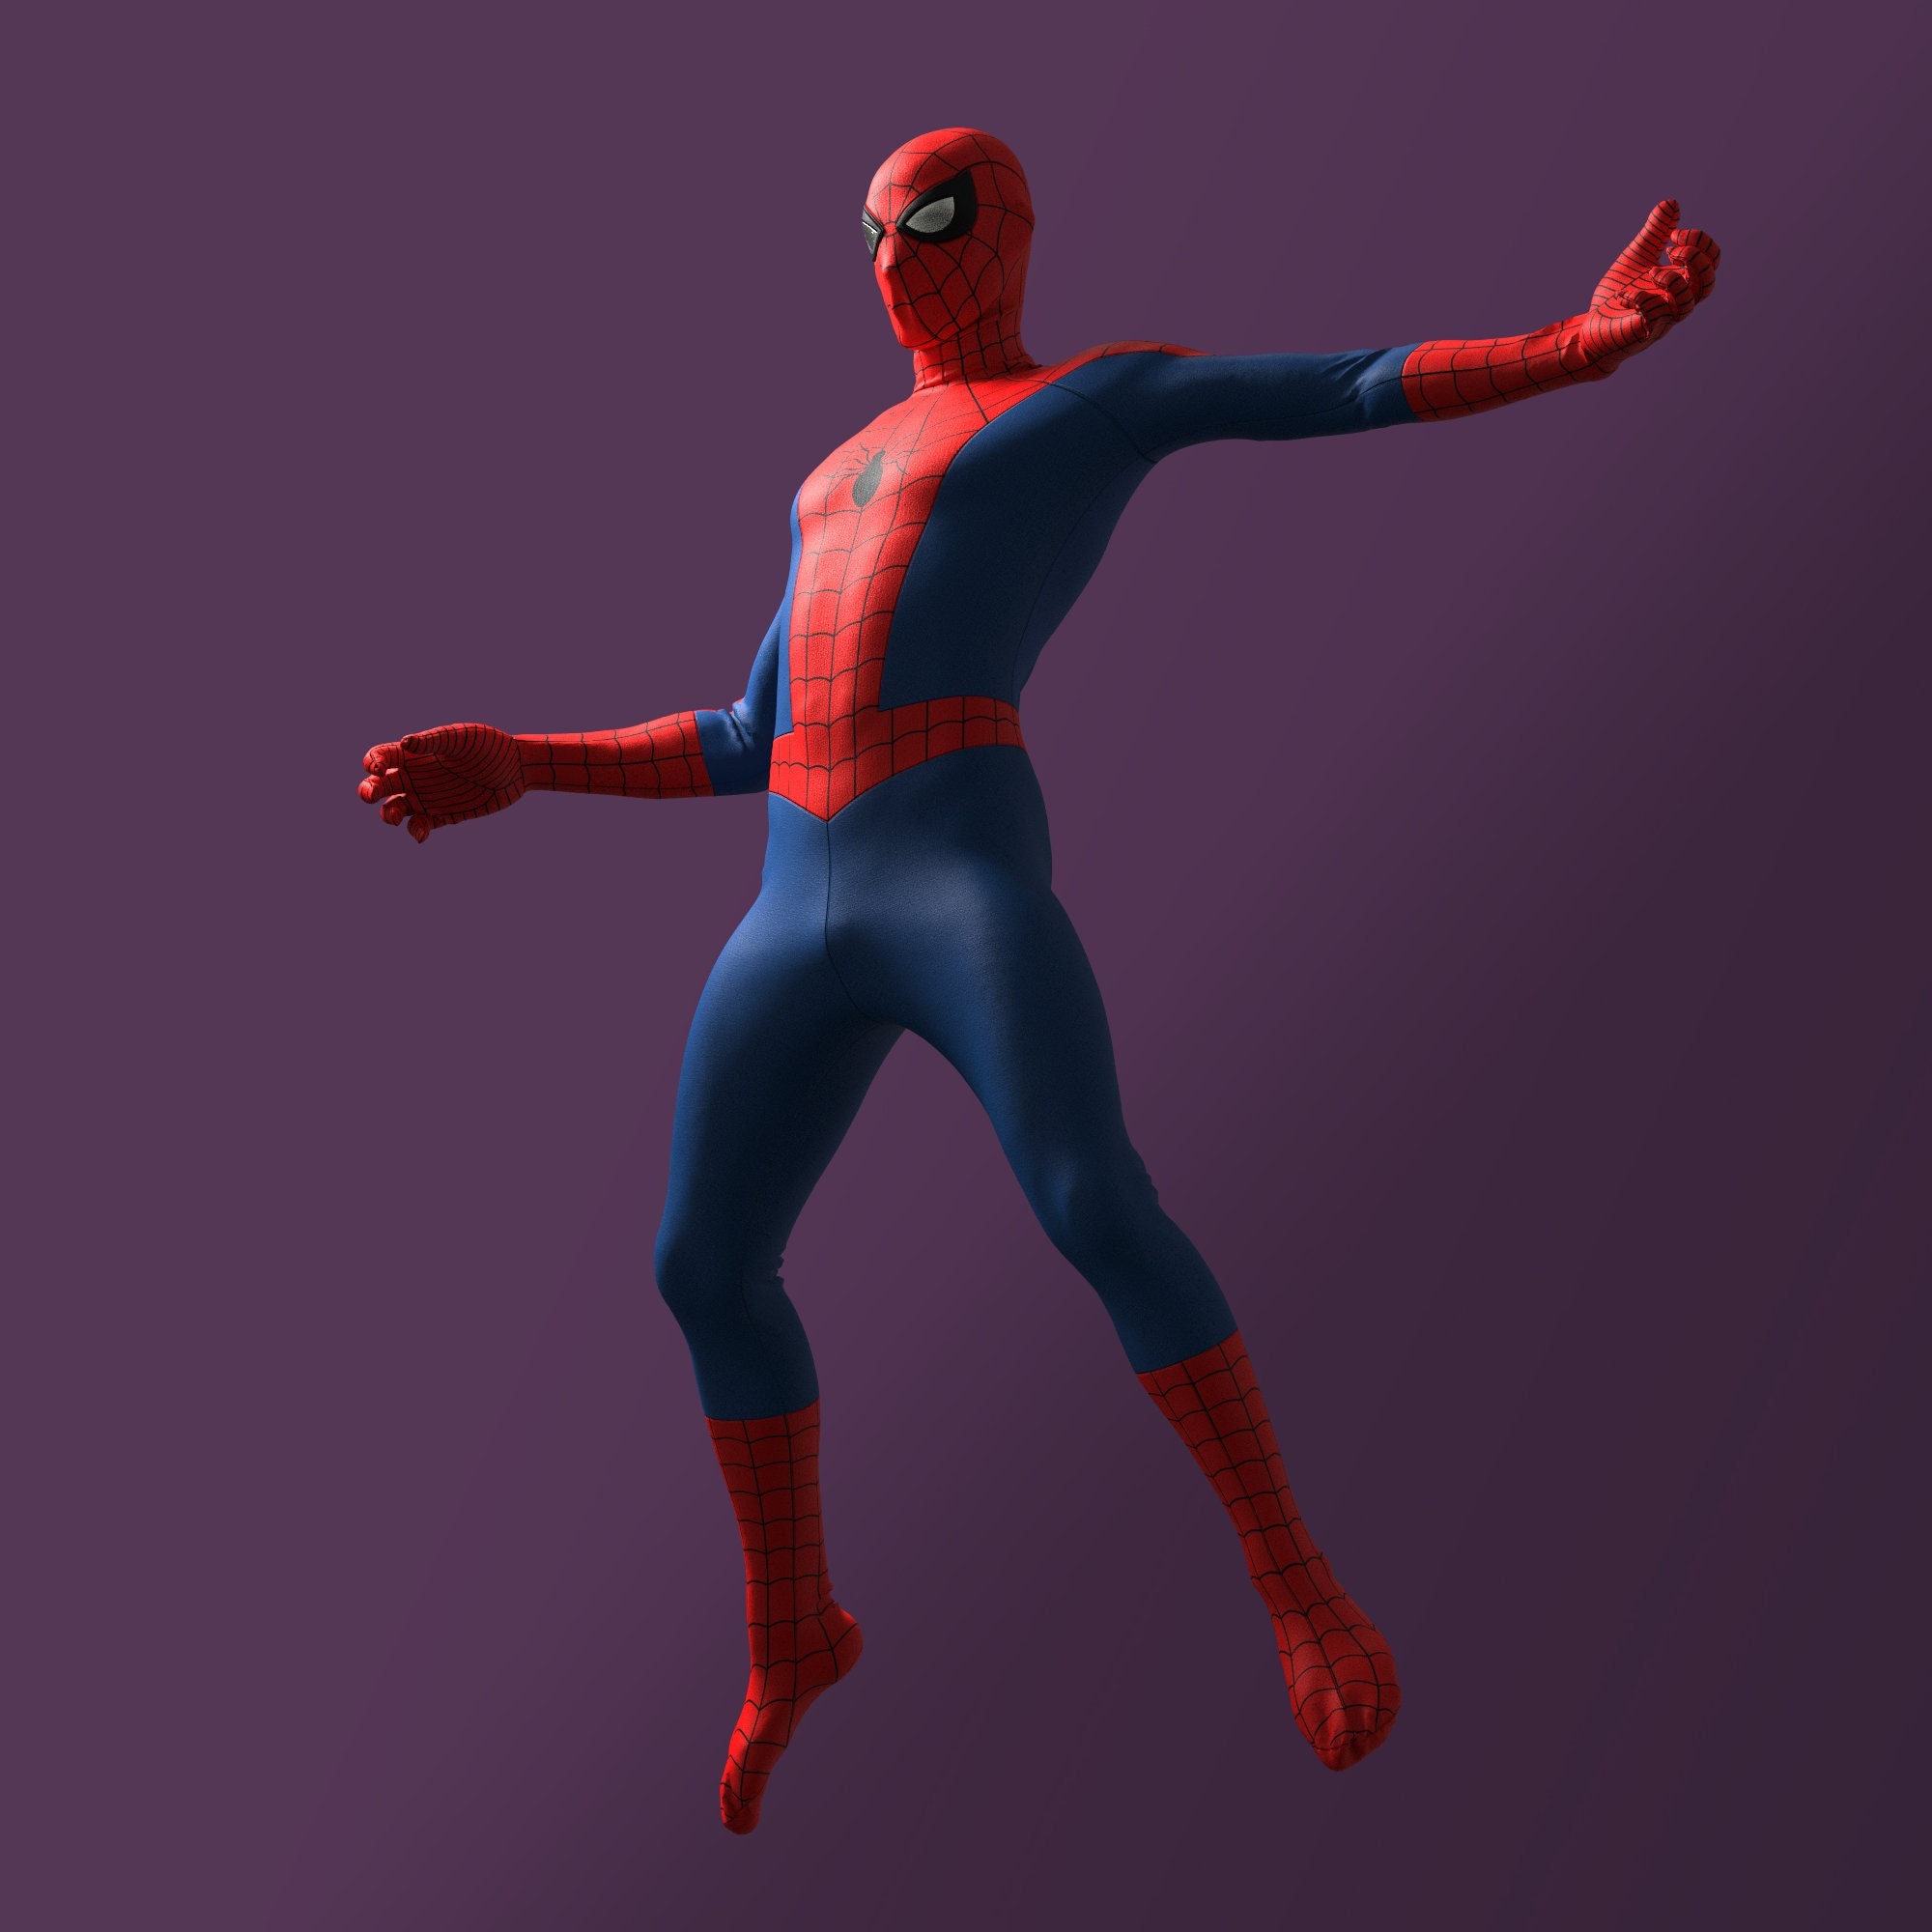 Marvel Superhero Spiderman Costume Homecoming Cosplay - PKAWAY